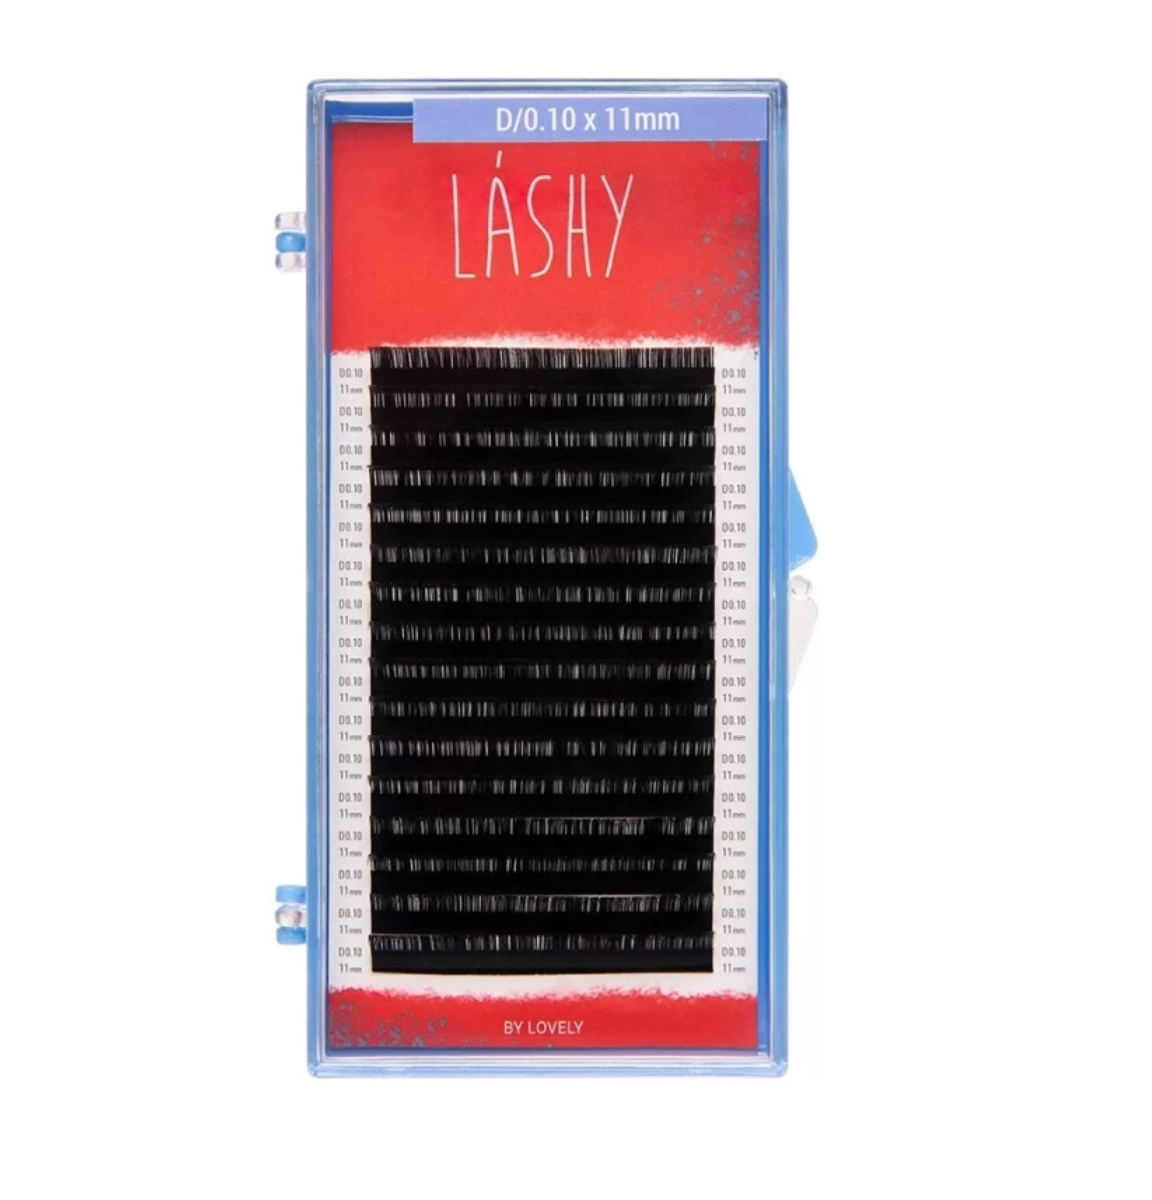 Ресницы Lashy Lovely чёрные 16 линий M 0.10 9 мм клей lovely lashy easy 5 мл